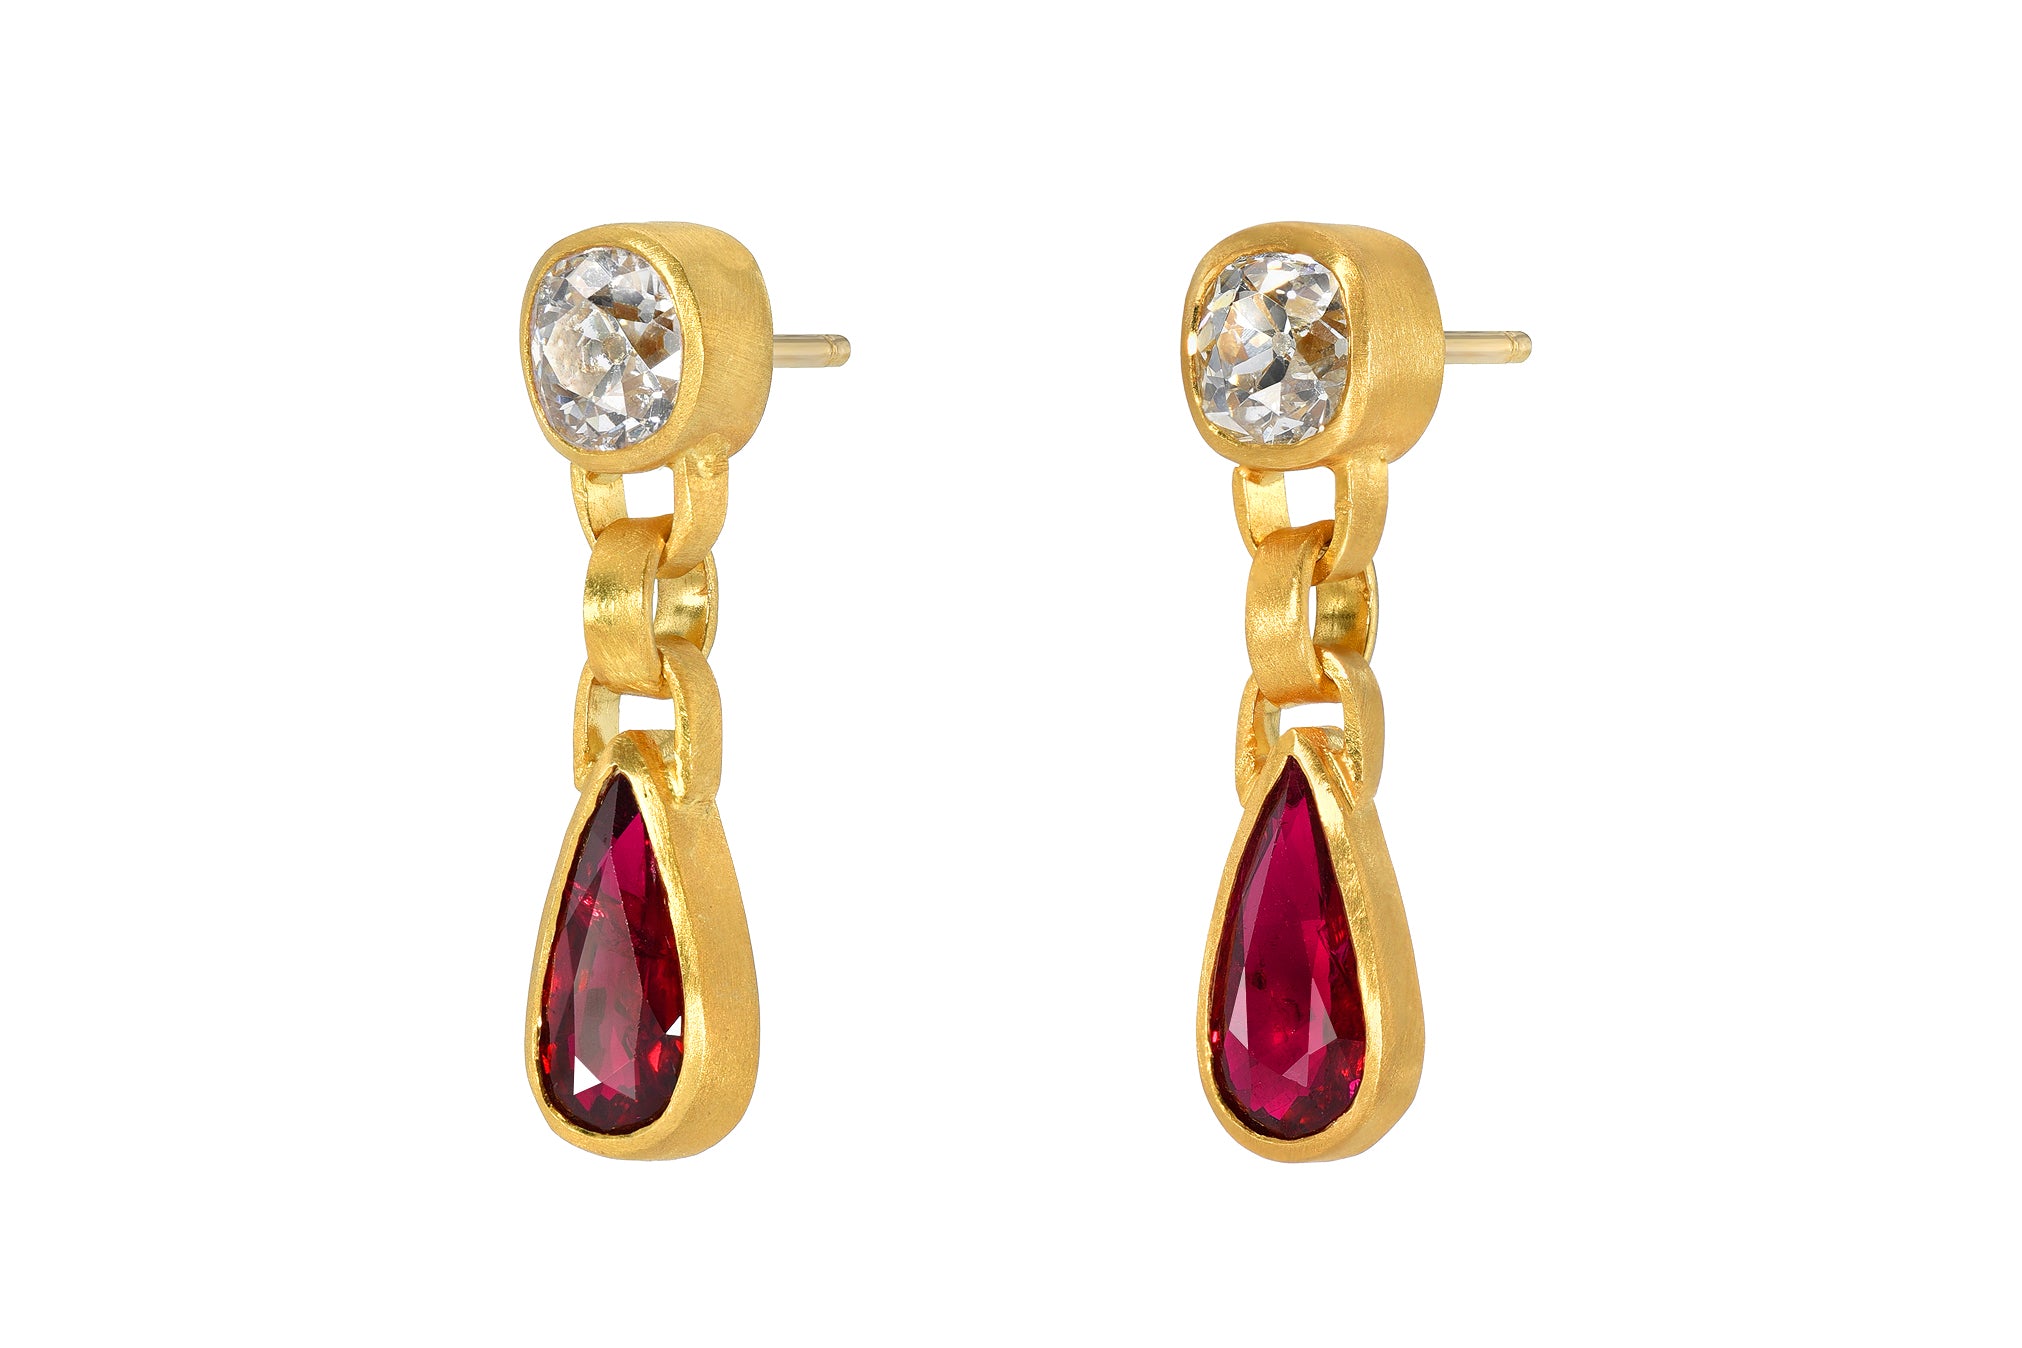 Darius Jewels one of a kind pear ruby & old mine cut diamond gem drop earrings 